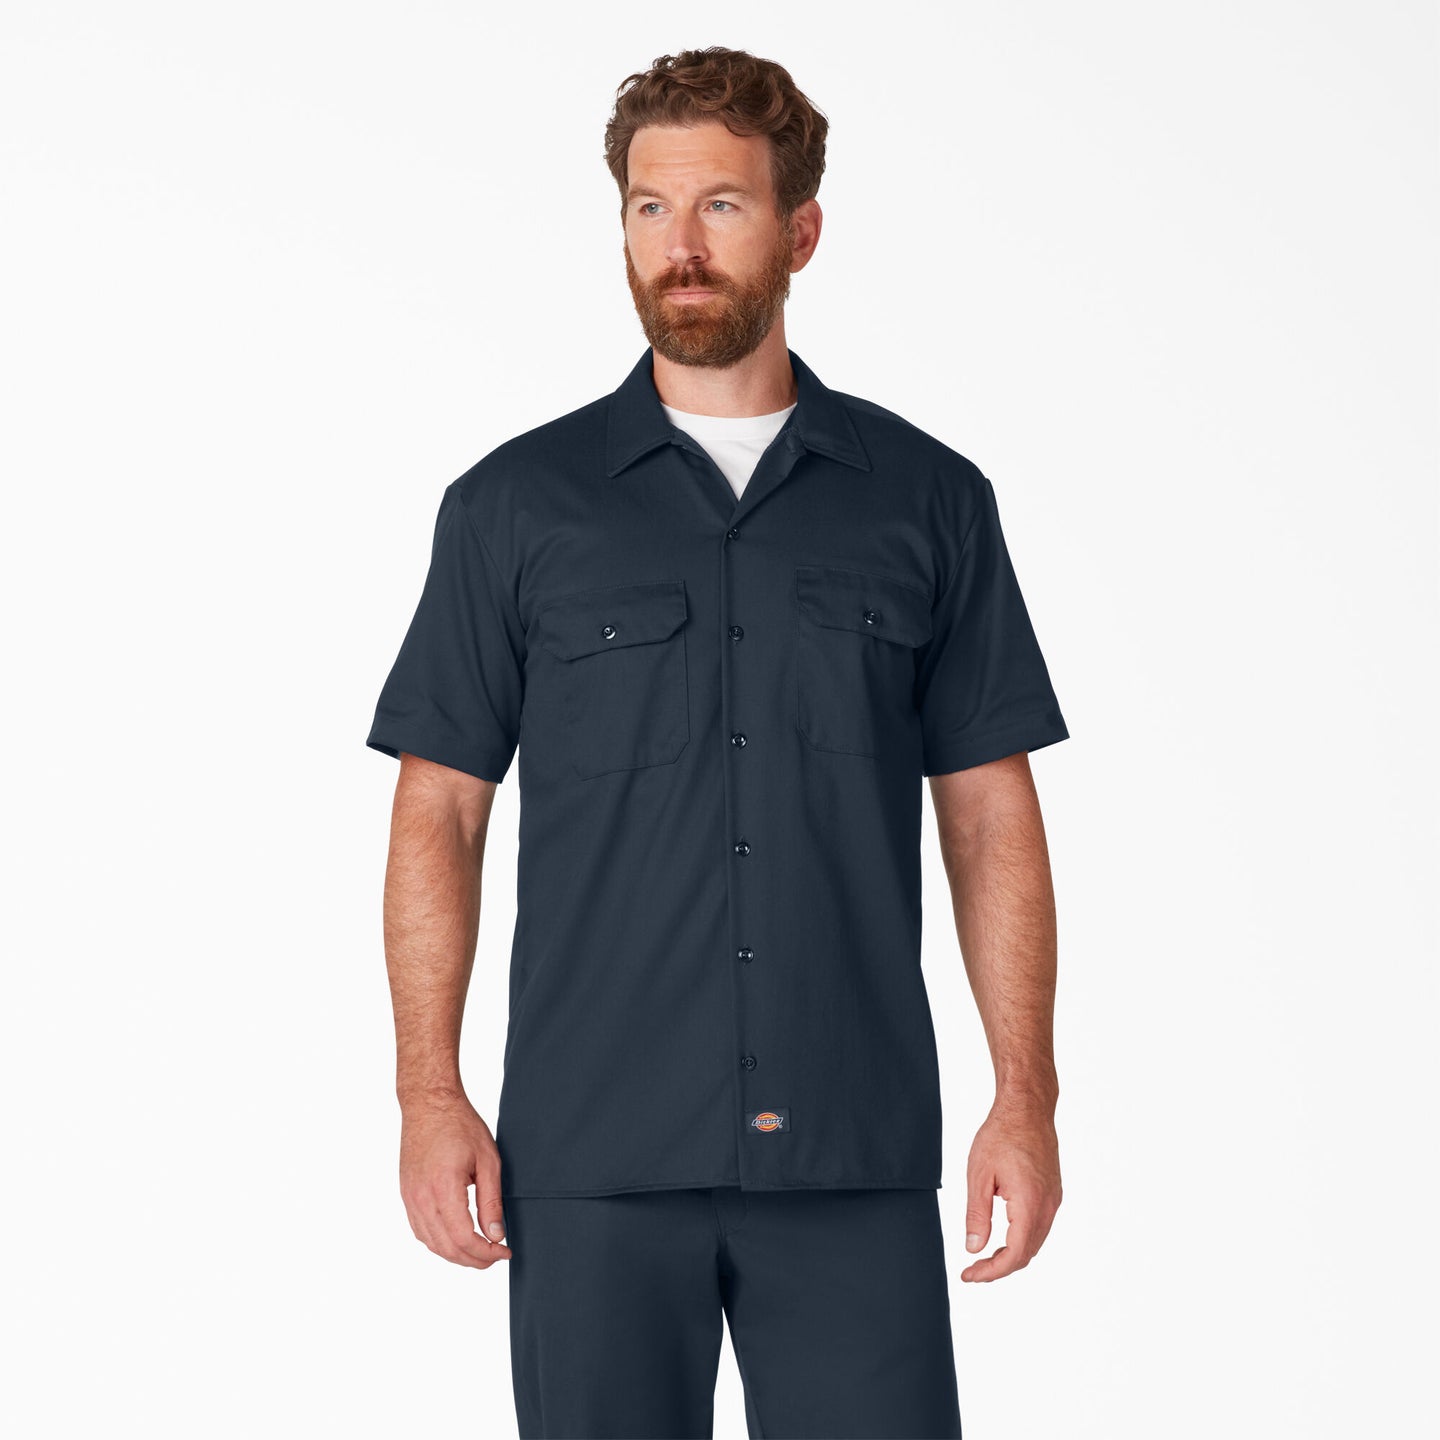 Short Sleeve Work Shirt, Dark Navy